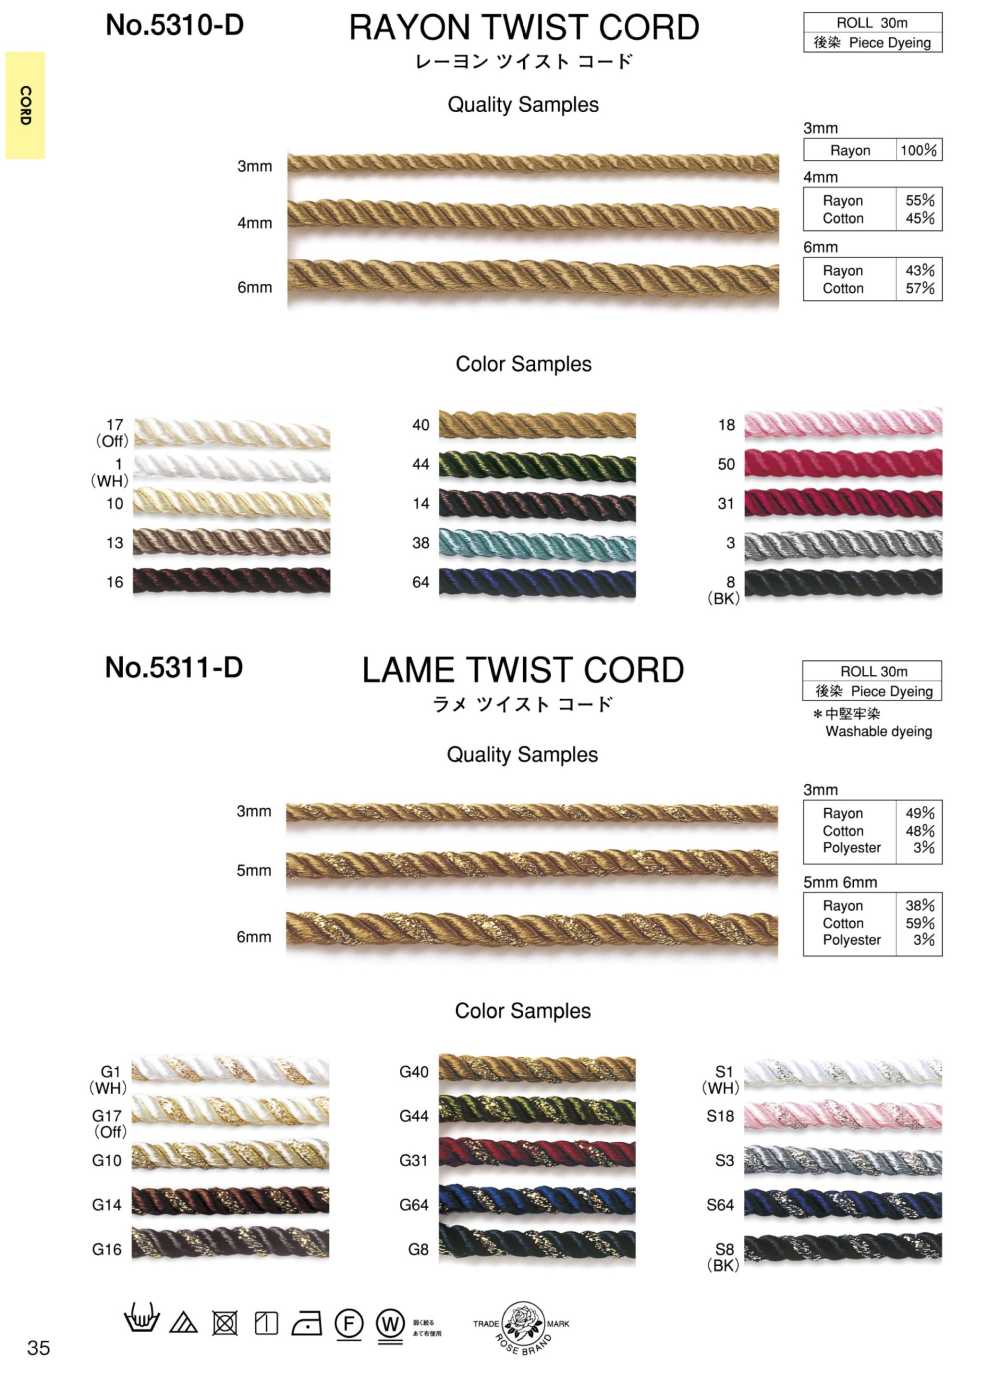 5311-D Lame Twist Cord[Bandbandschnur] ROSE BRAND (Marushin)